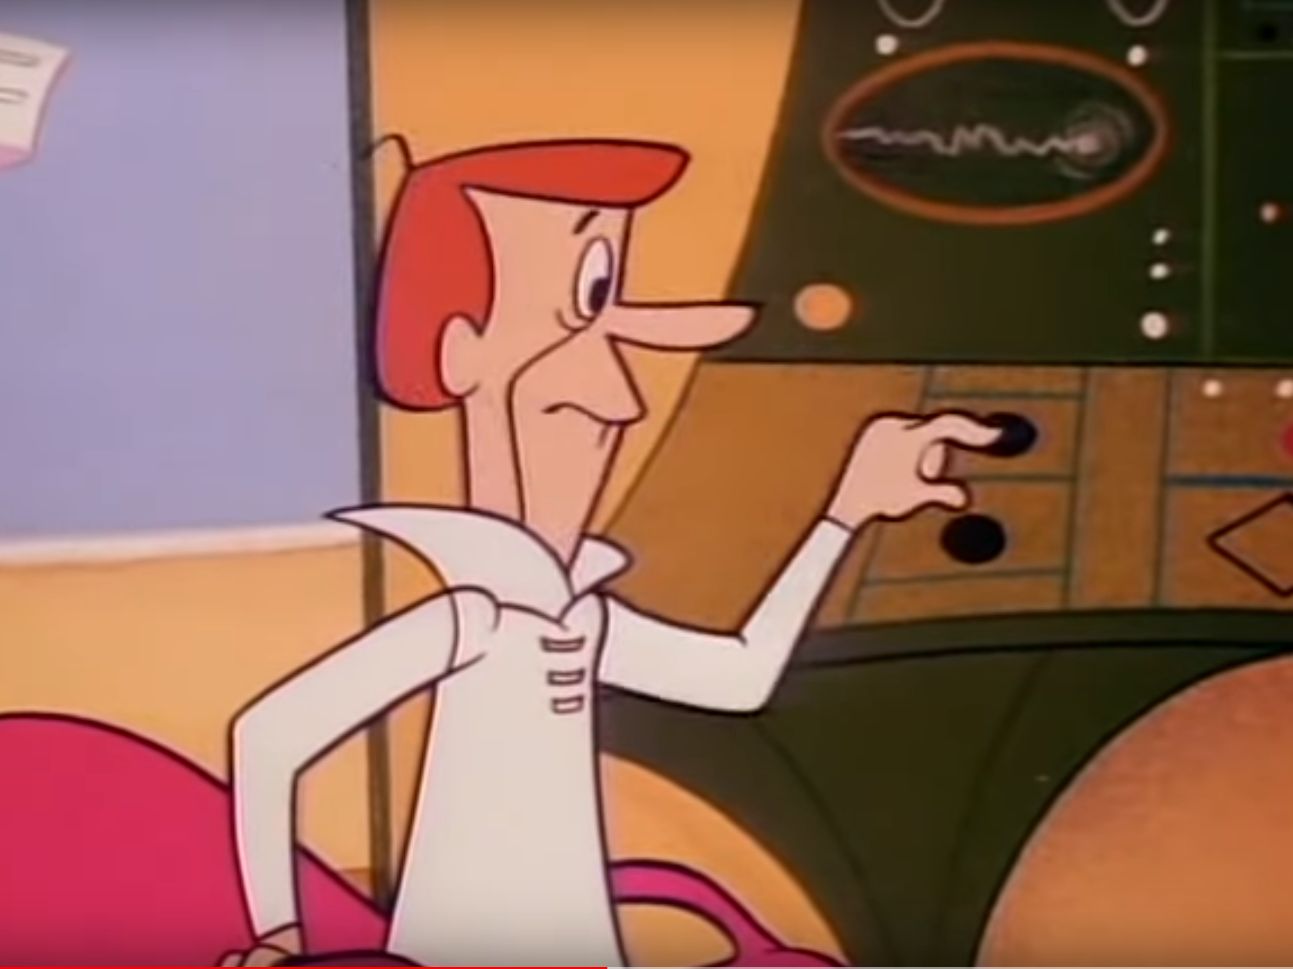 George Jetson正在推动一个按钮在工作机器,穿着一件白色上衣,看起来有点担心